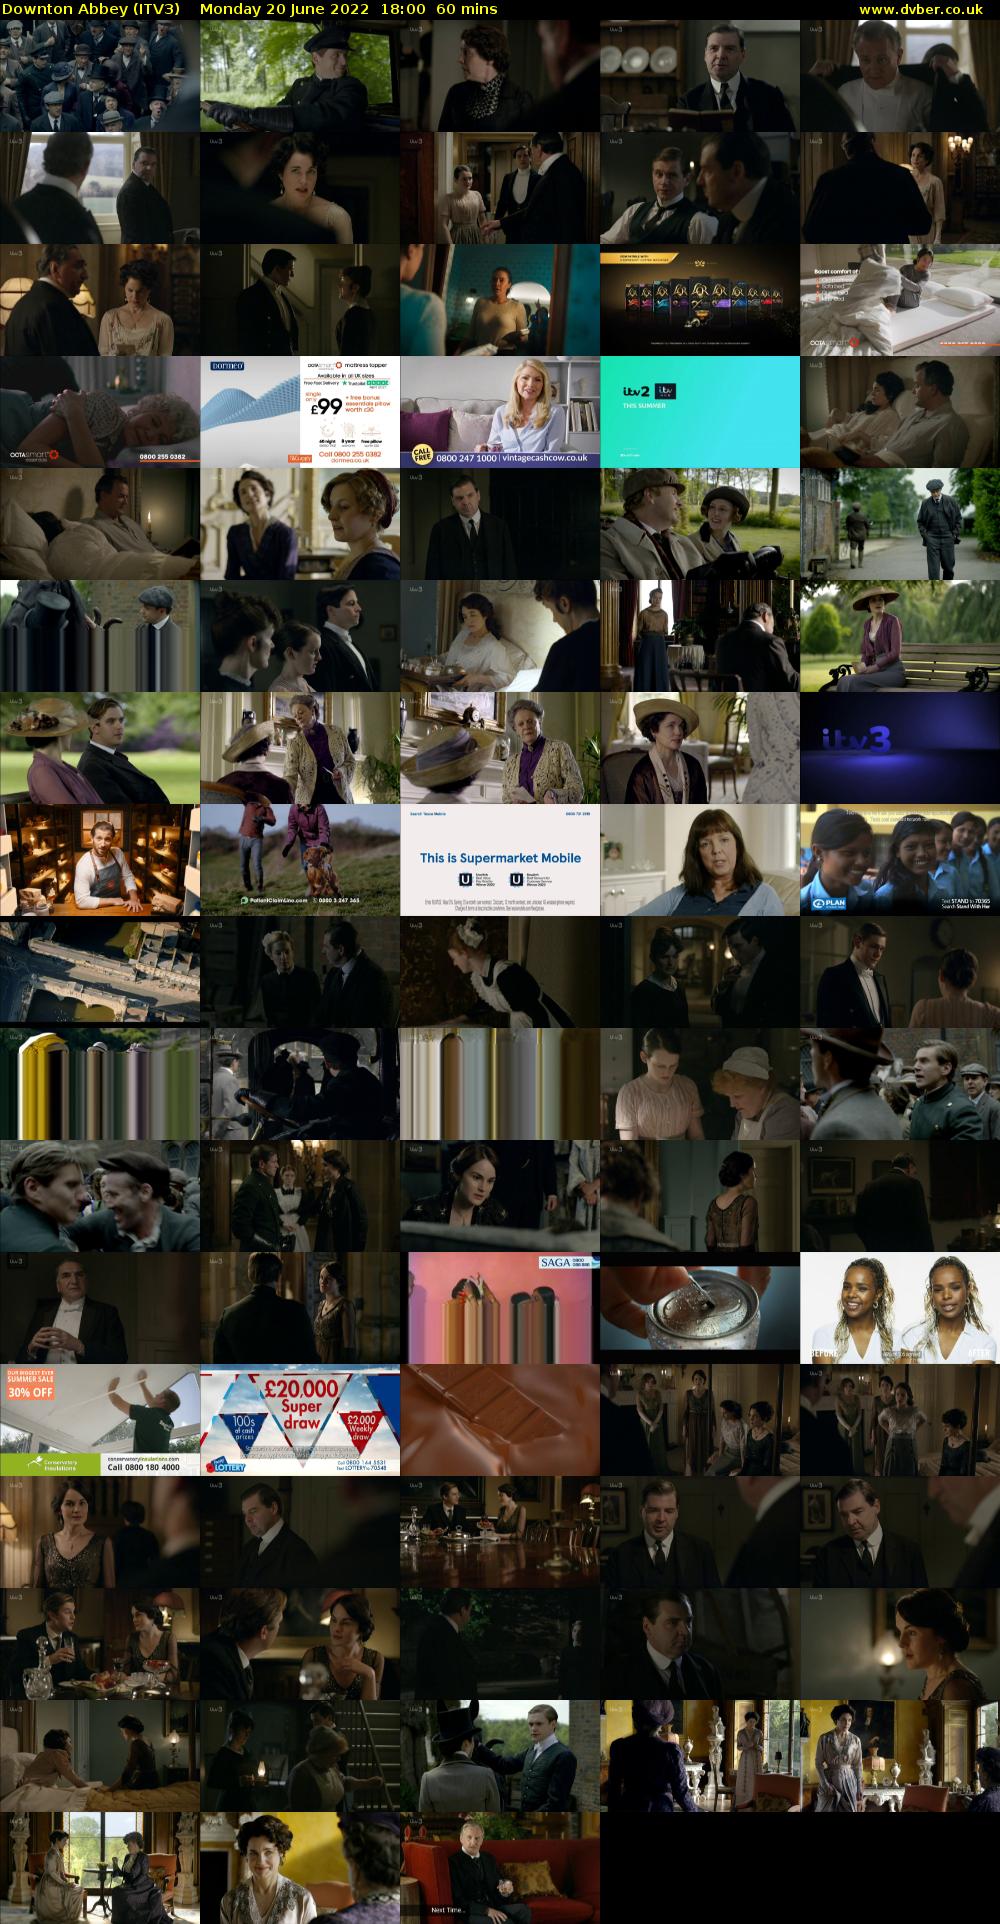 Downton Abbey (ITV3) Monday 20 June 2022 18:00 - 19:00